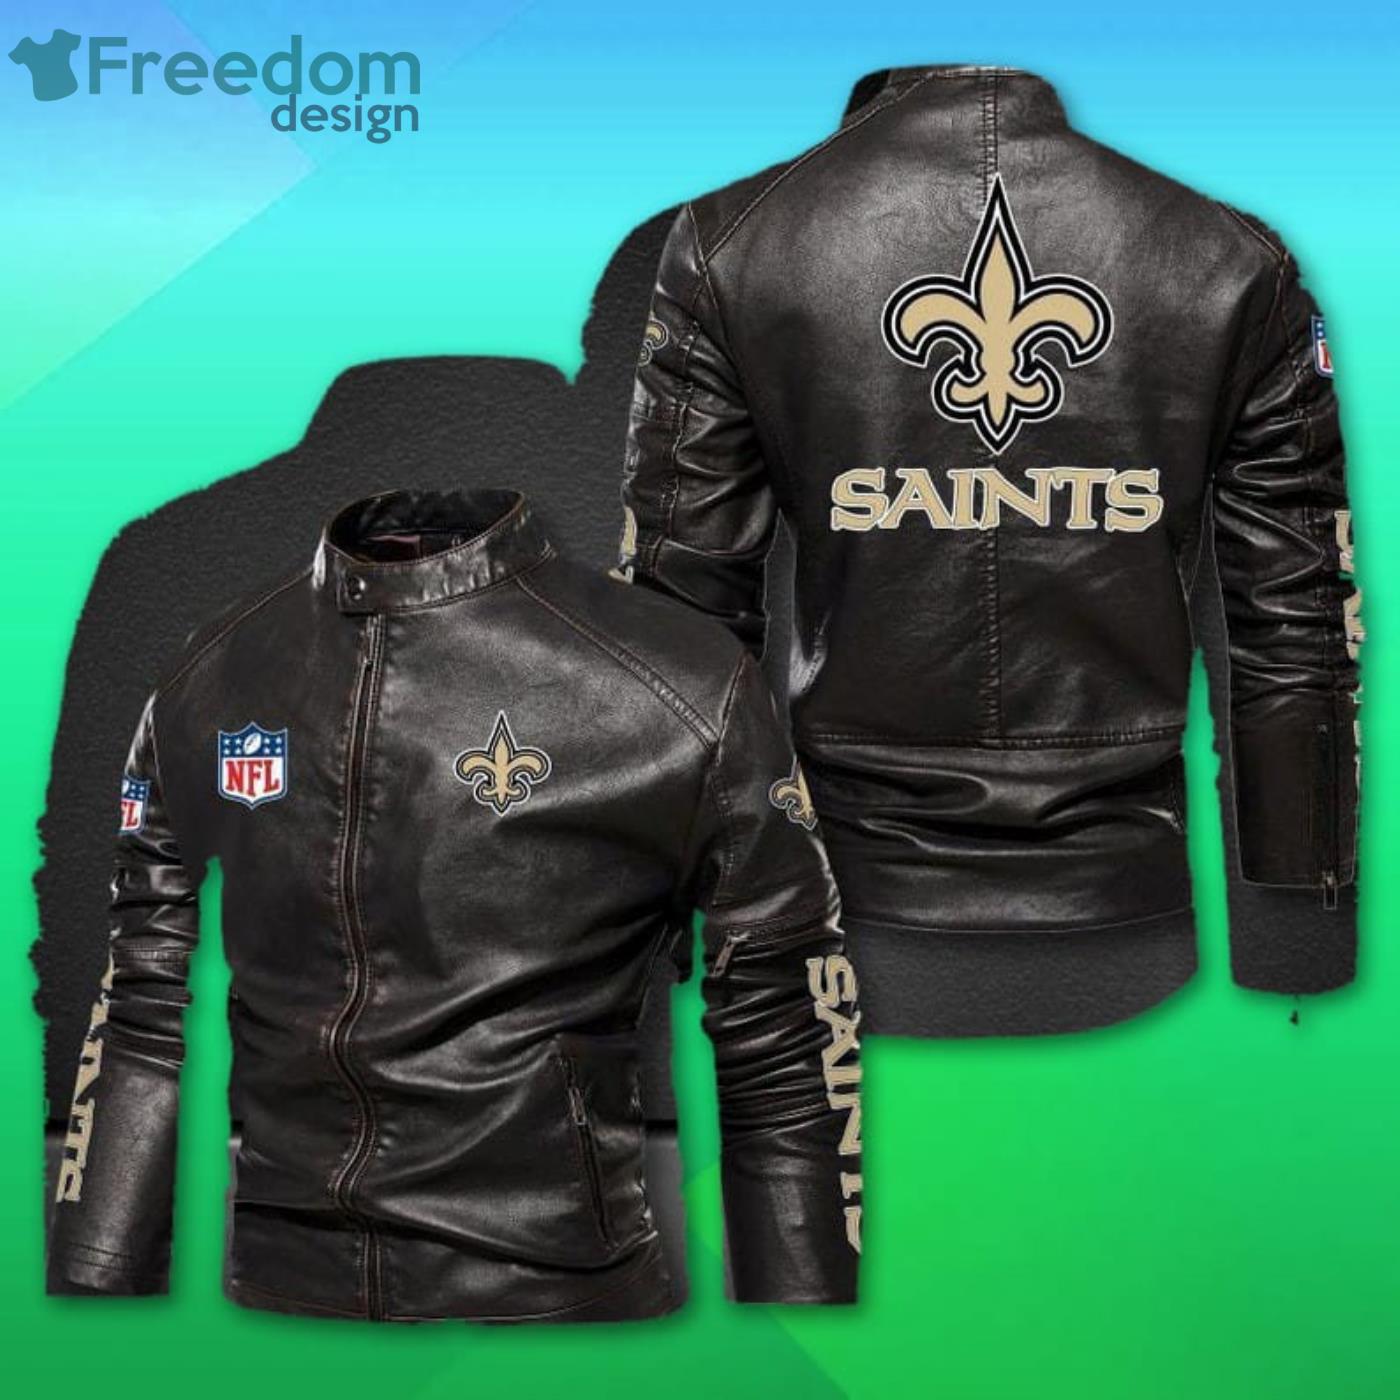 New Orleans Saints NFL Motor Fleece Leather Jacket - Freedomdesign